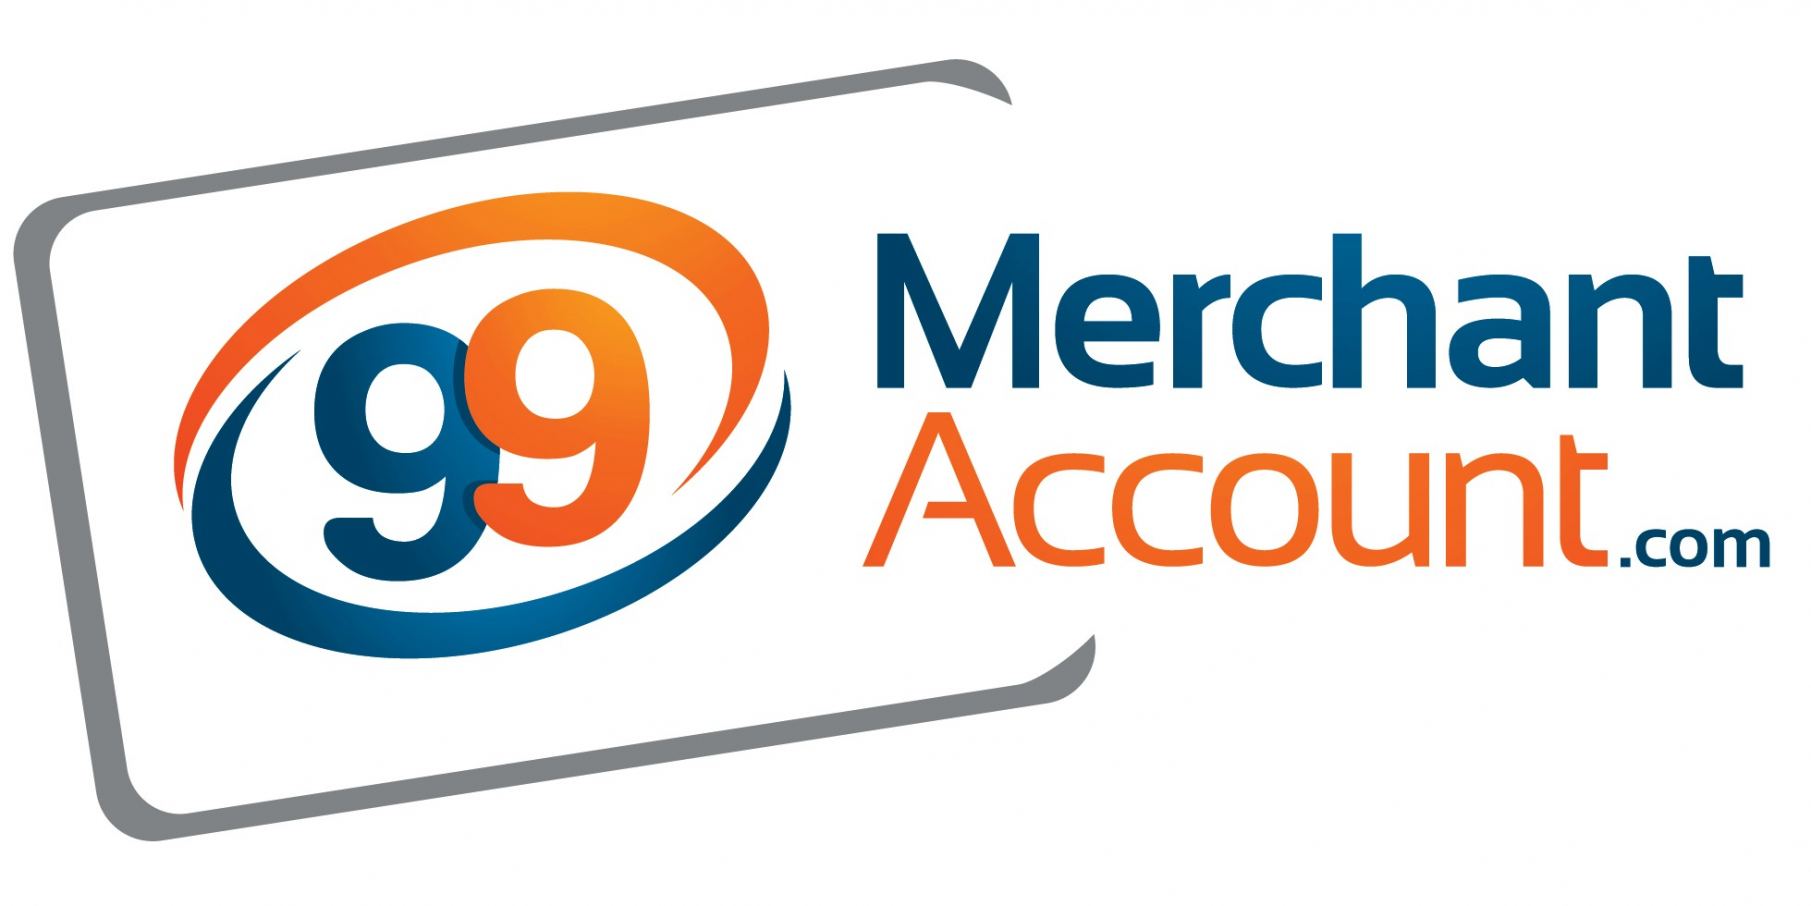 99MerchantAccount.com Logo